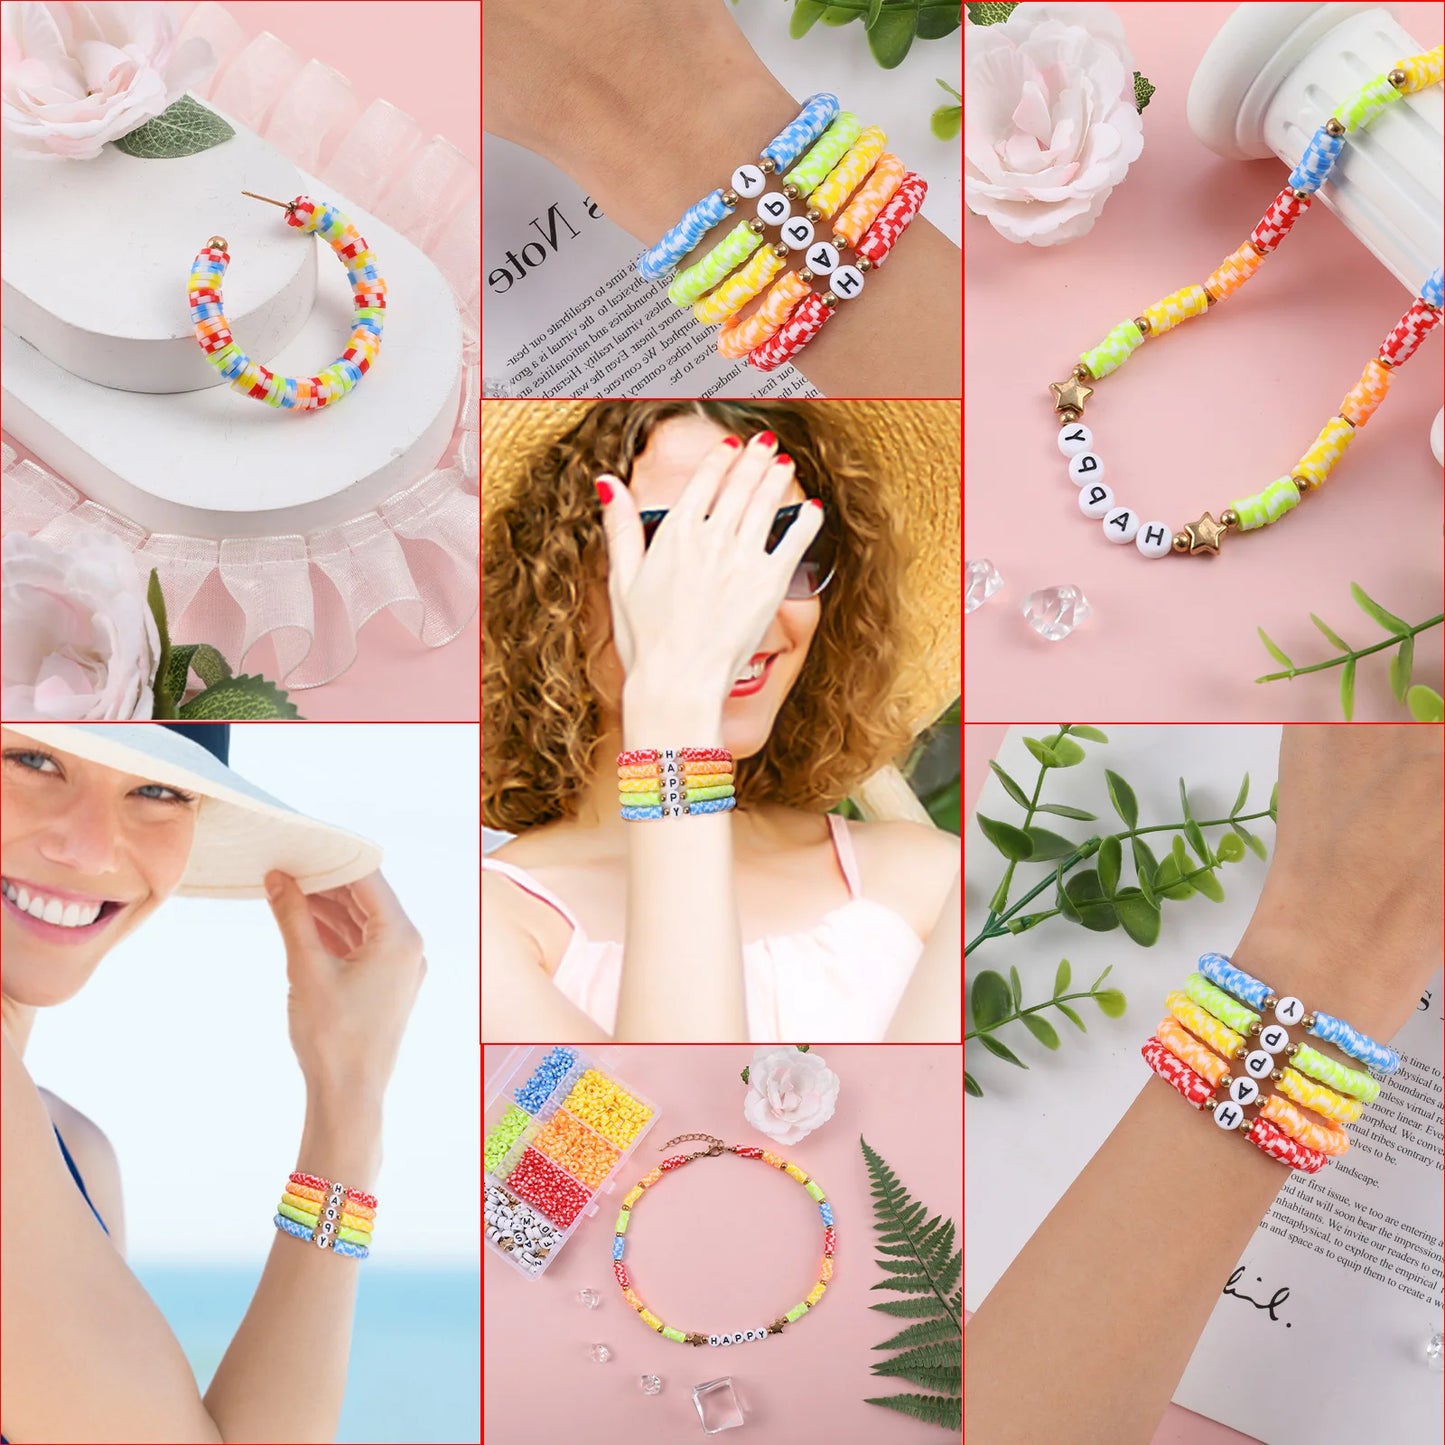 DIY Jewelry Making Kit - Soft Pottery Beads for Bracelets & Necklaces - Makersland